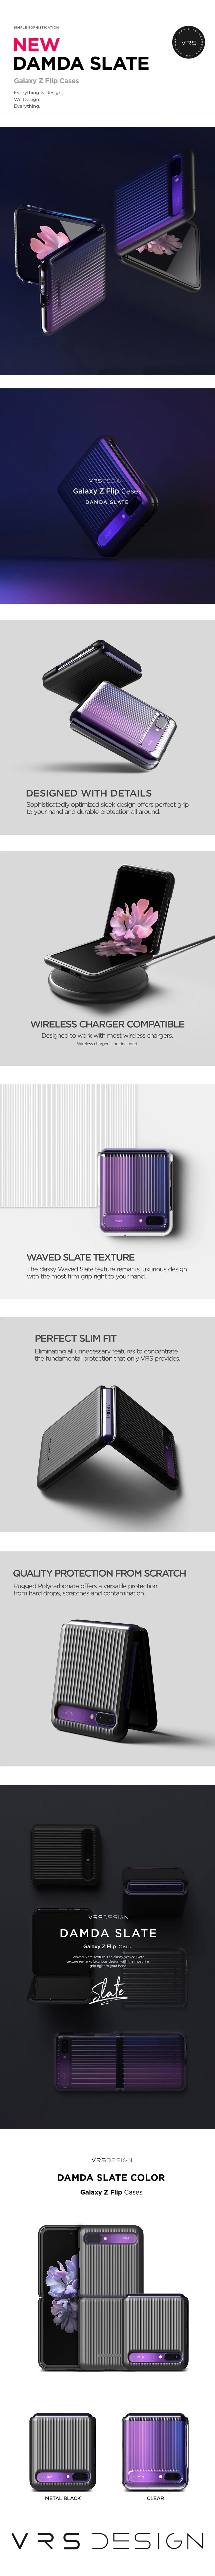 Samsung Galaxy Z Fold slim lightweight rugged clear durable case slot with sleek minimalism by VRS